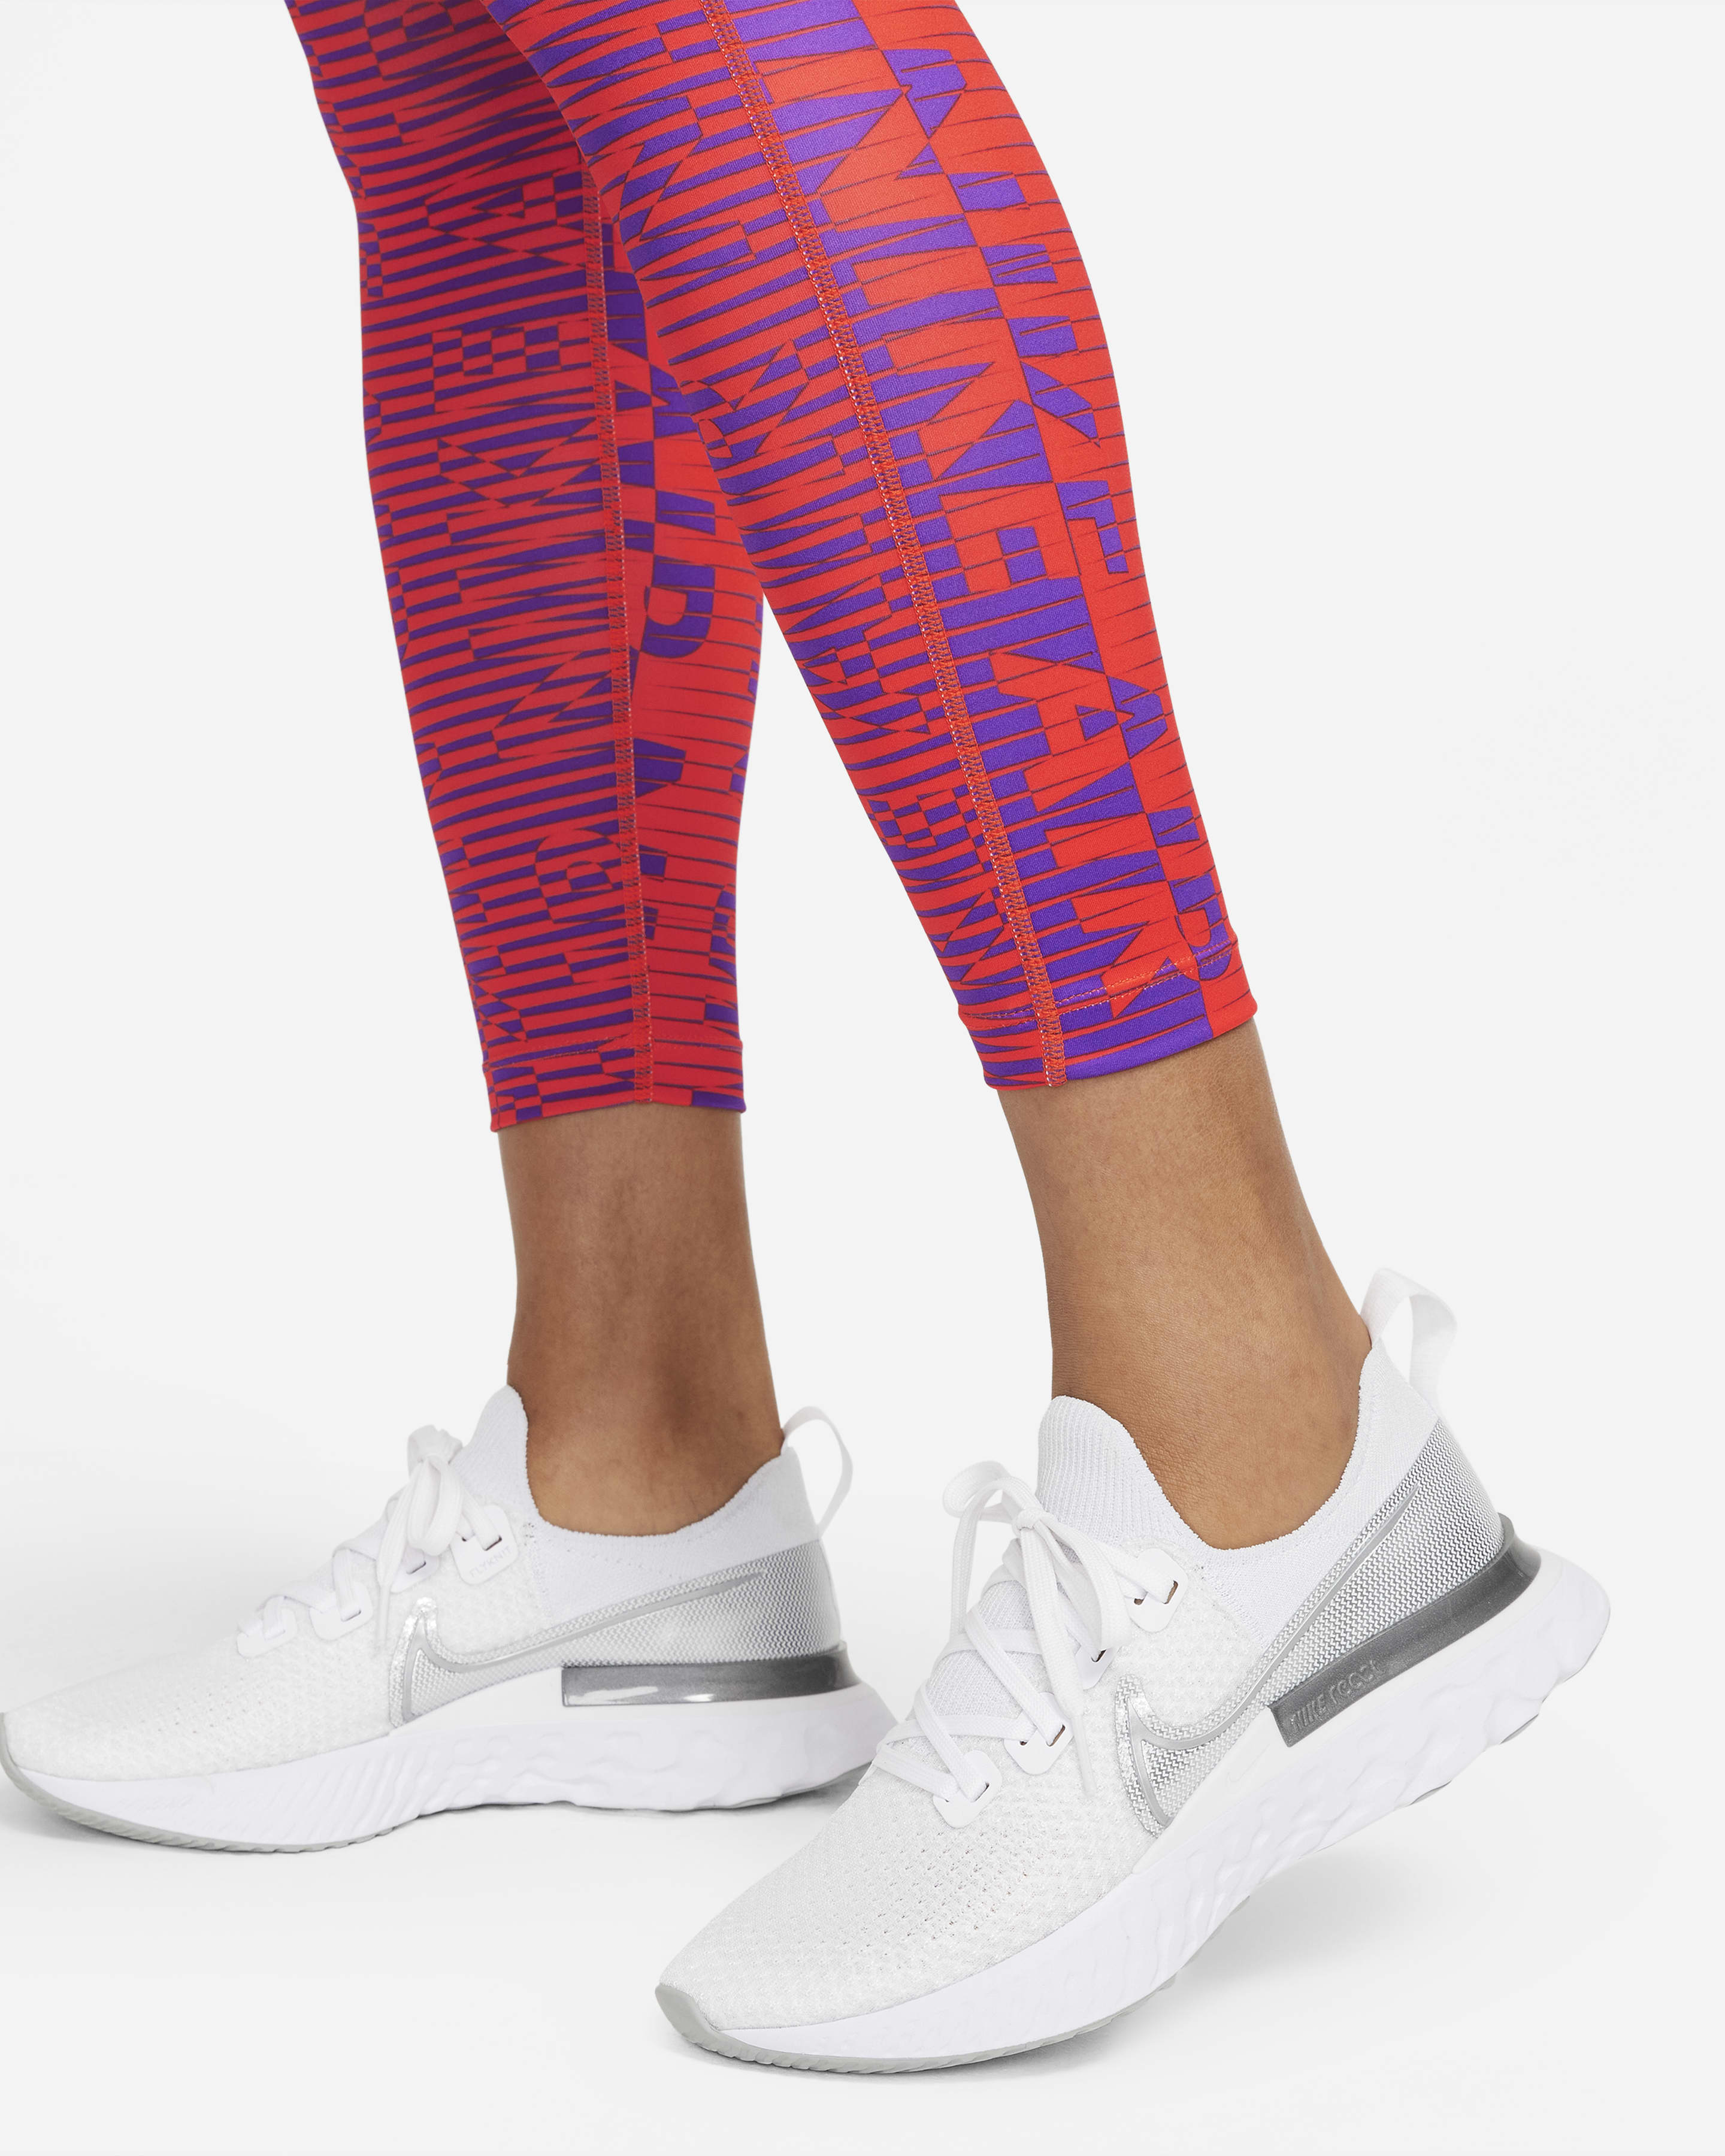 Legging woman Nike Epic Fast - Nike - Women's running shoes